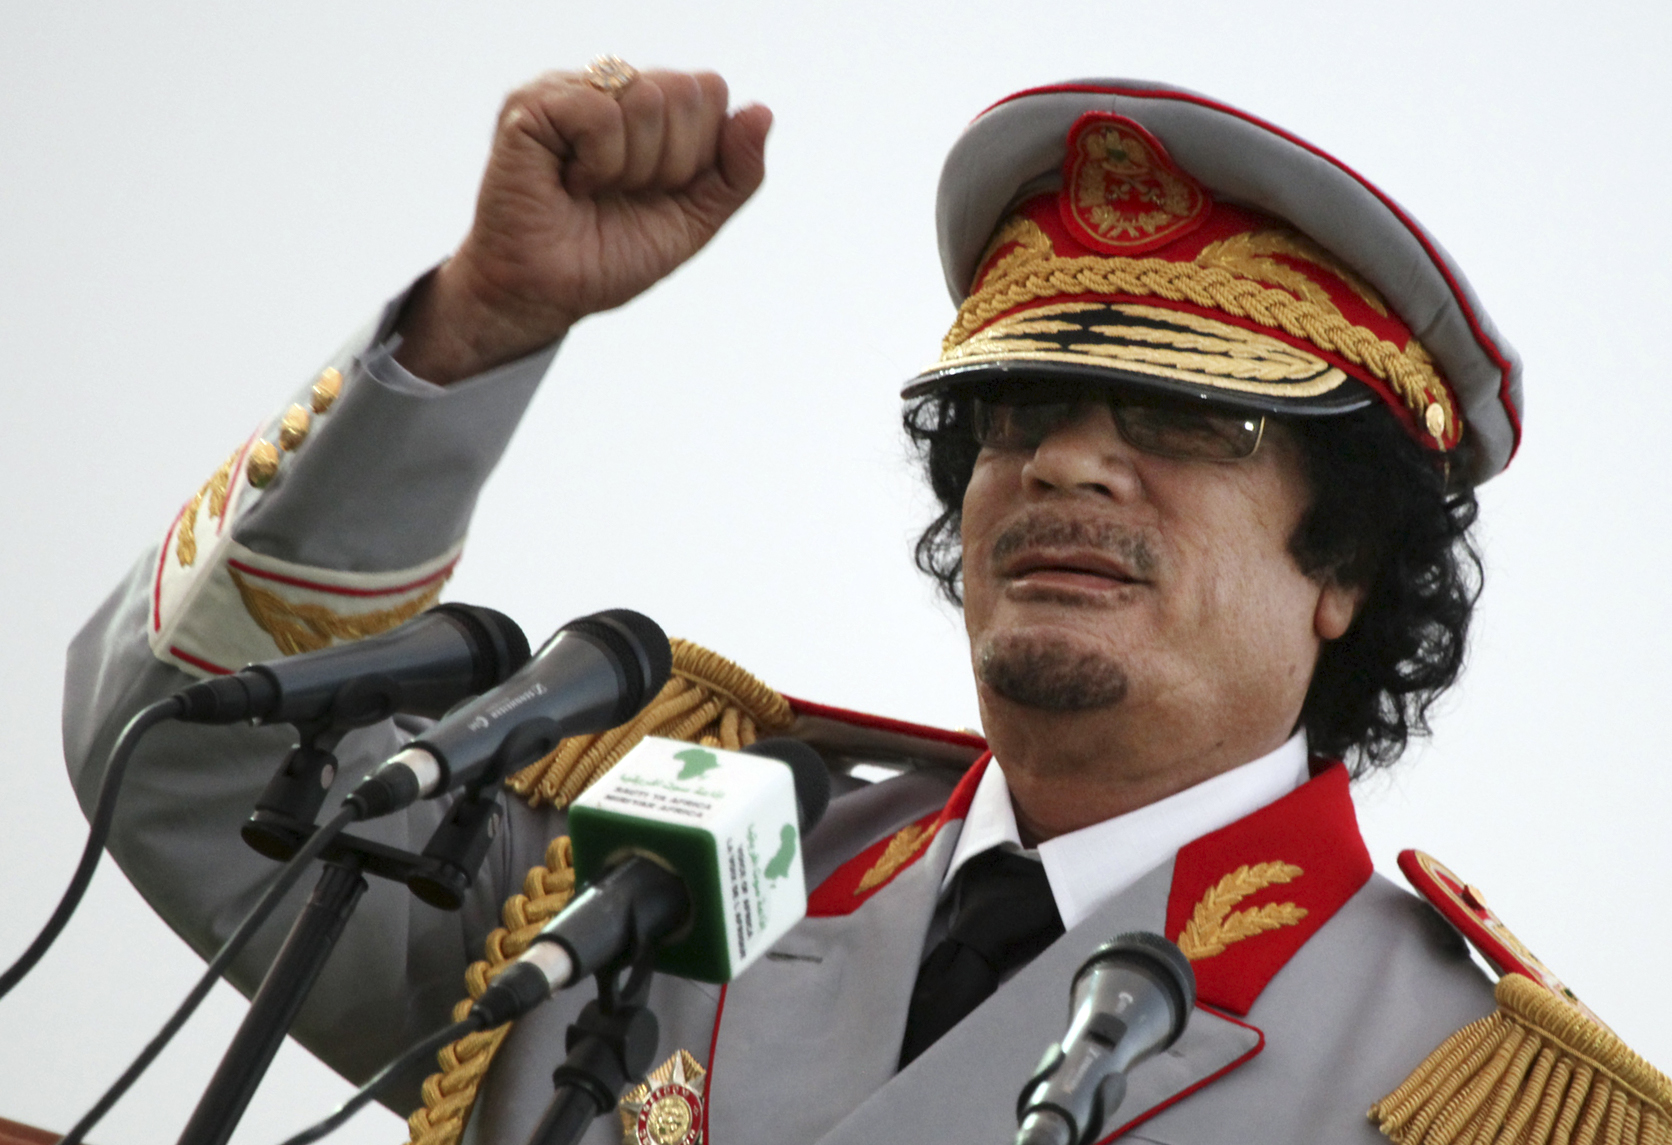 Libyen, Muammar Khaddafi, Protester, Kravaller, Khaddafi, Tunisien, Uppror, Revolution, Demonstration